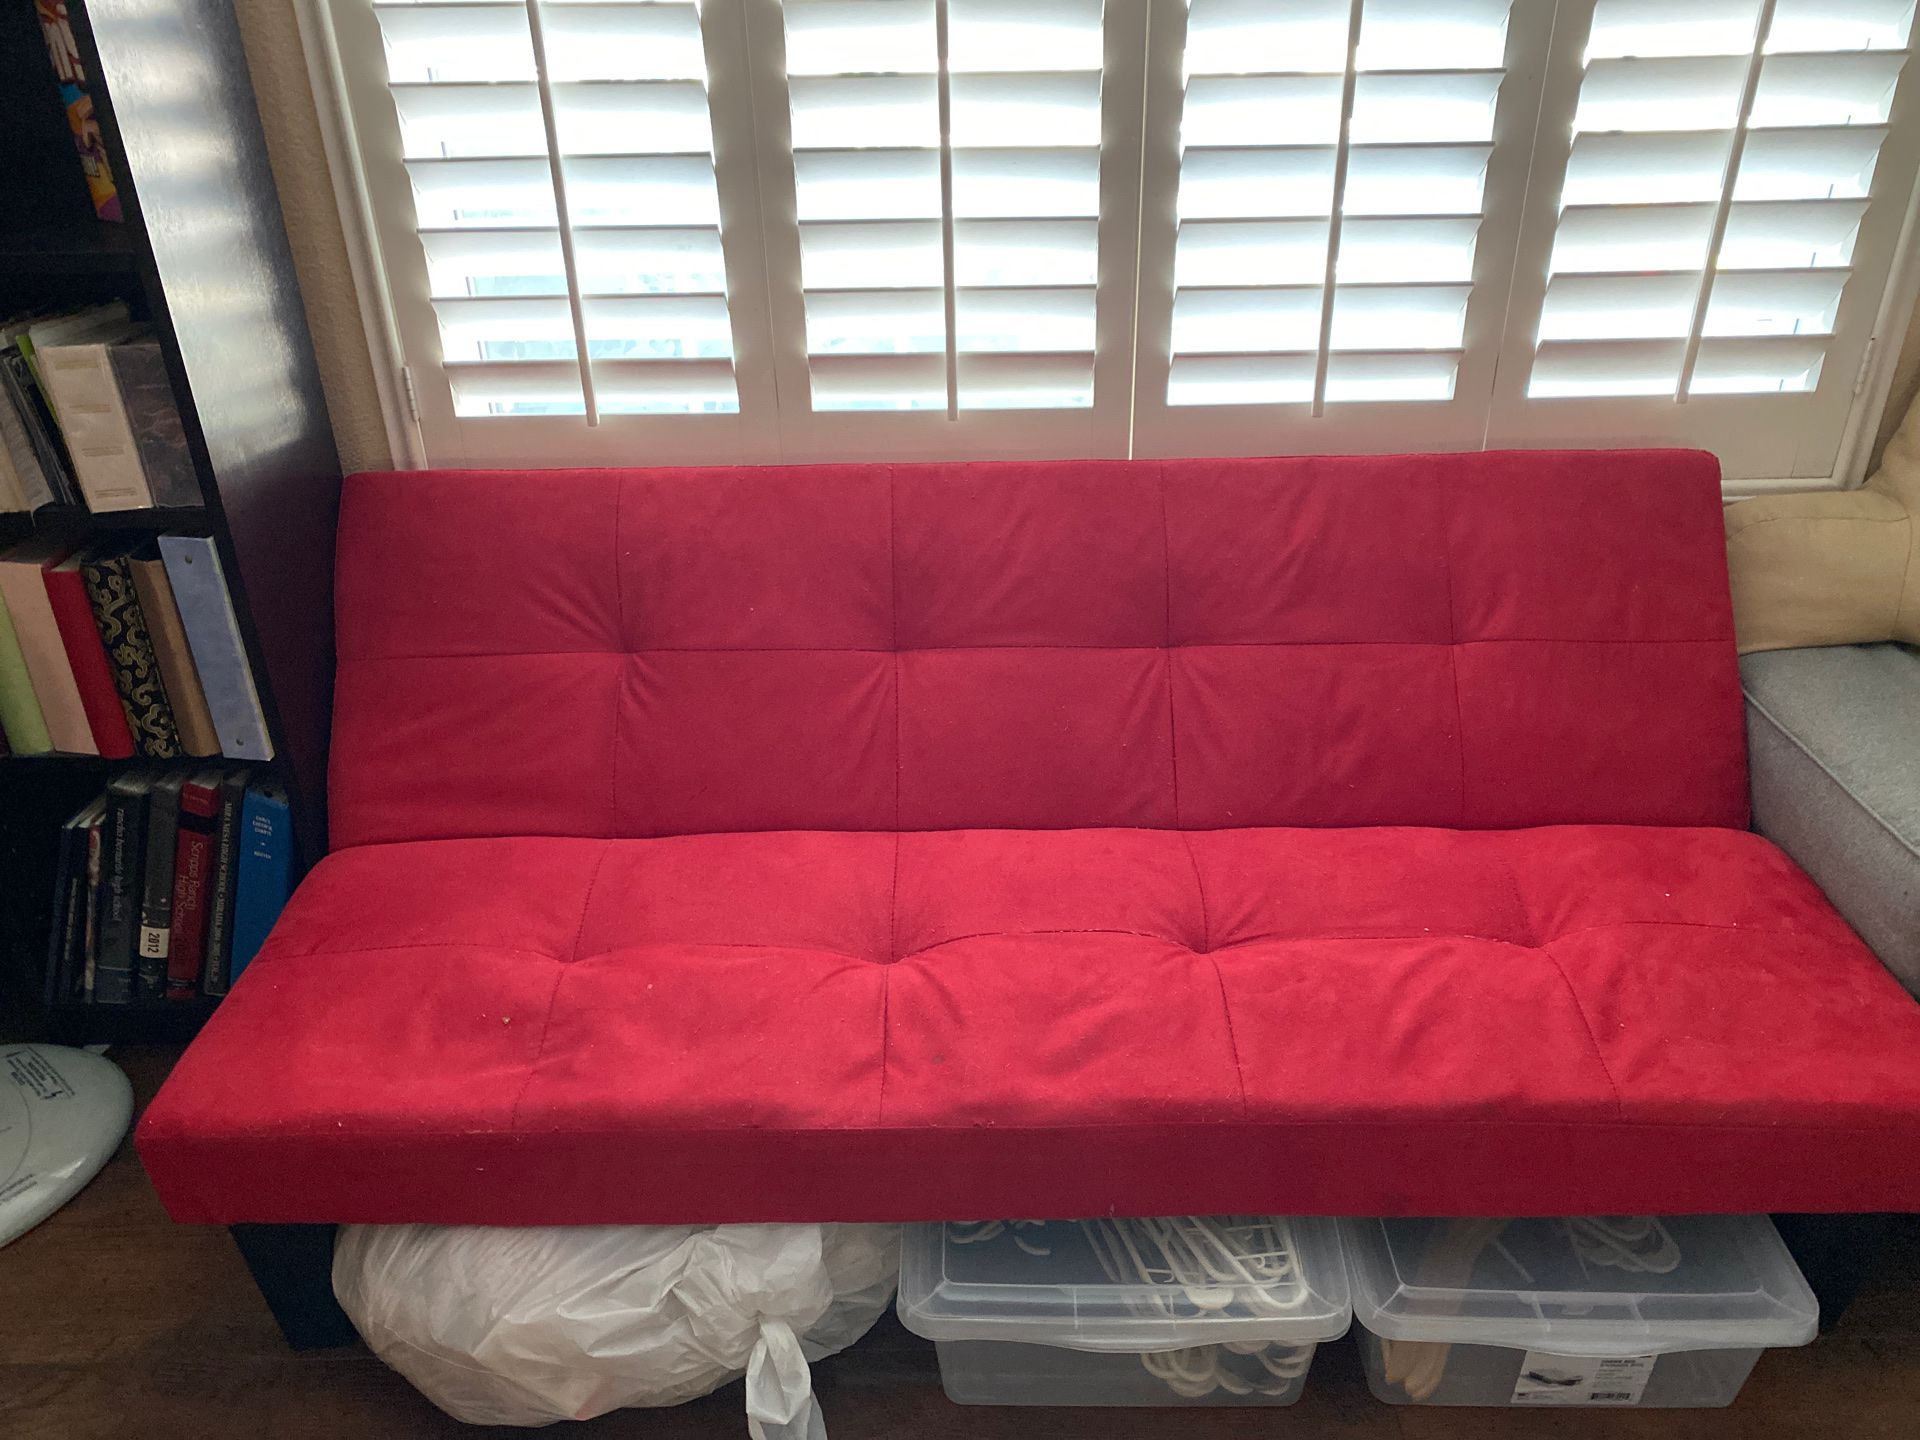 Red futon sofa lounge chair